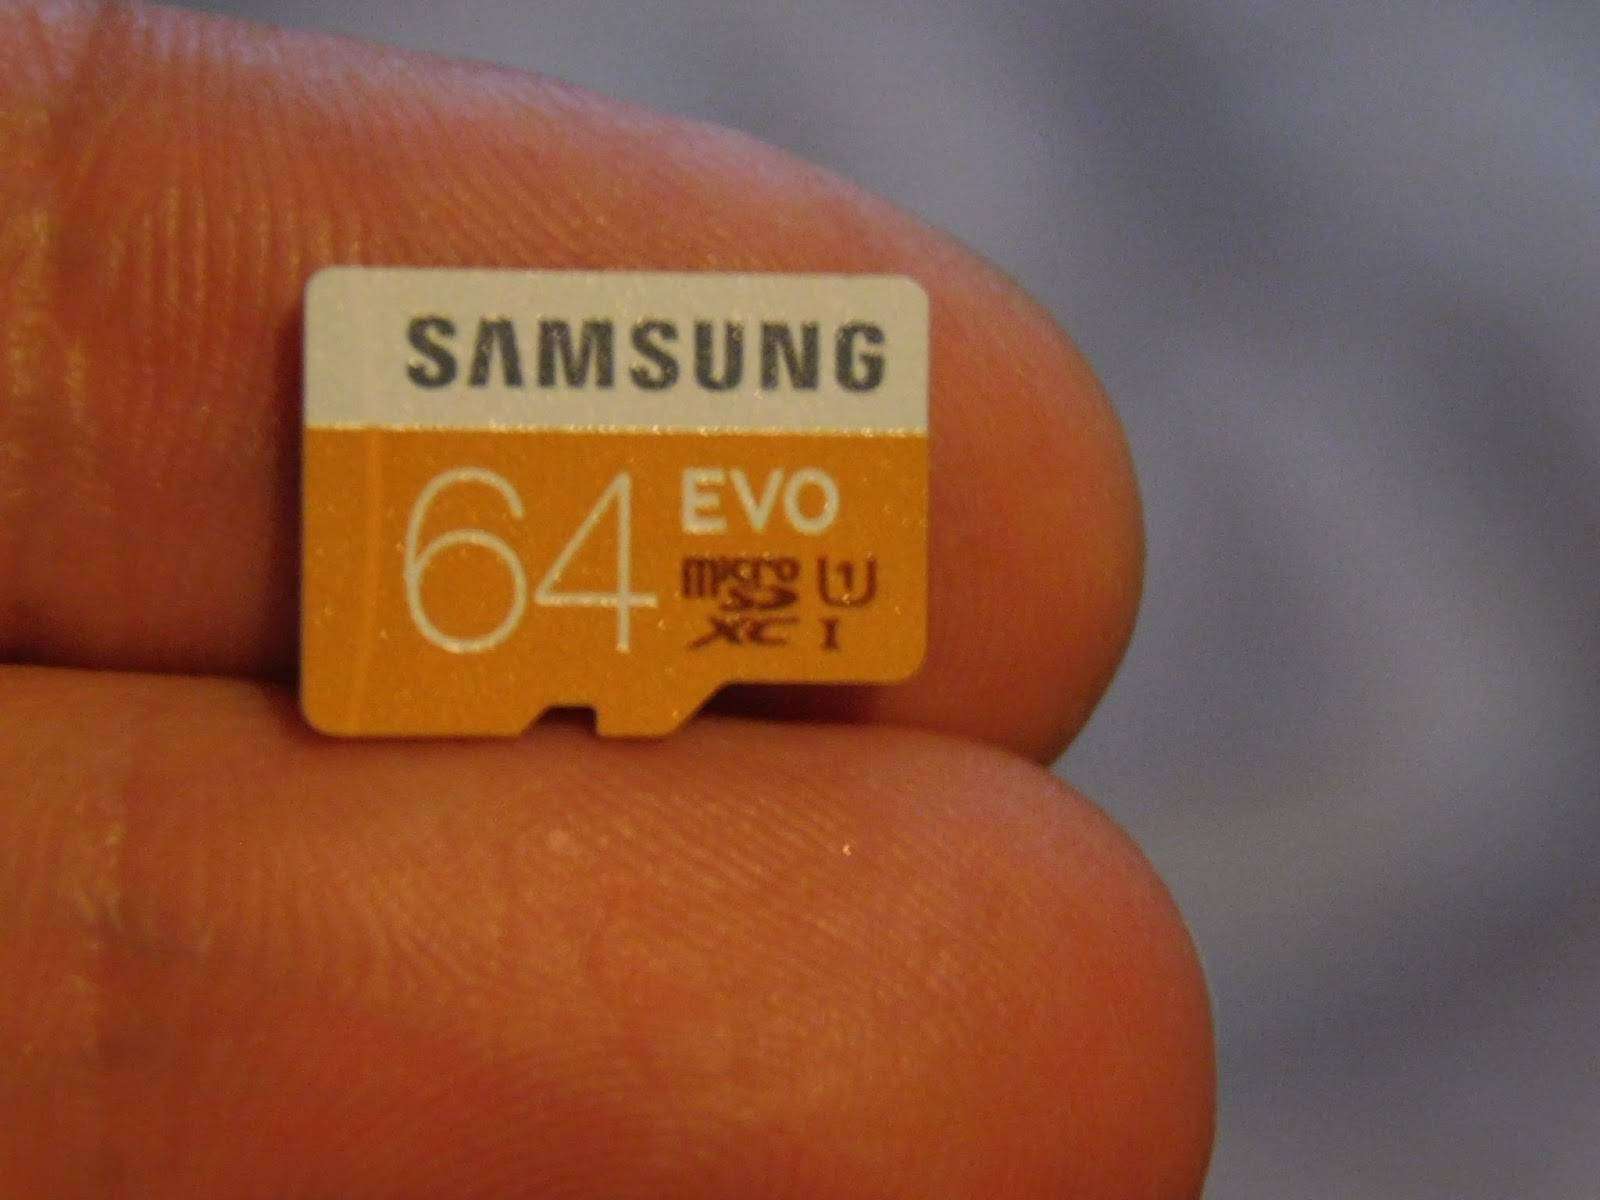 Samsung 64